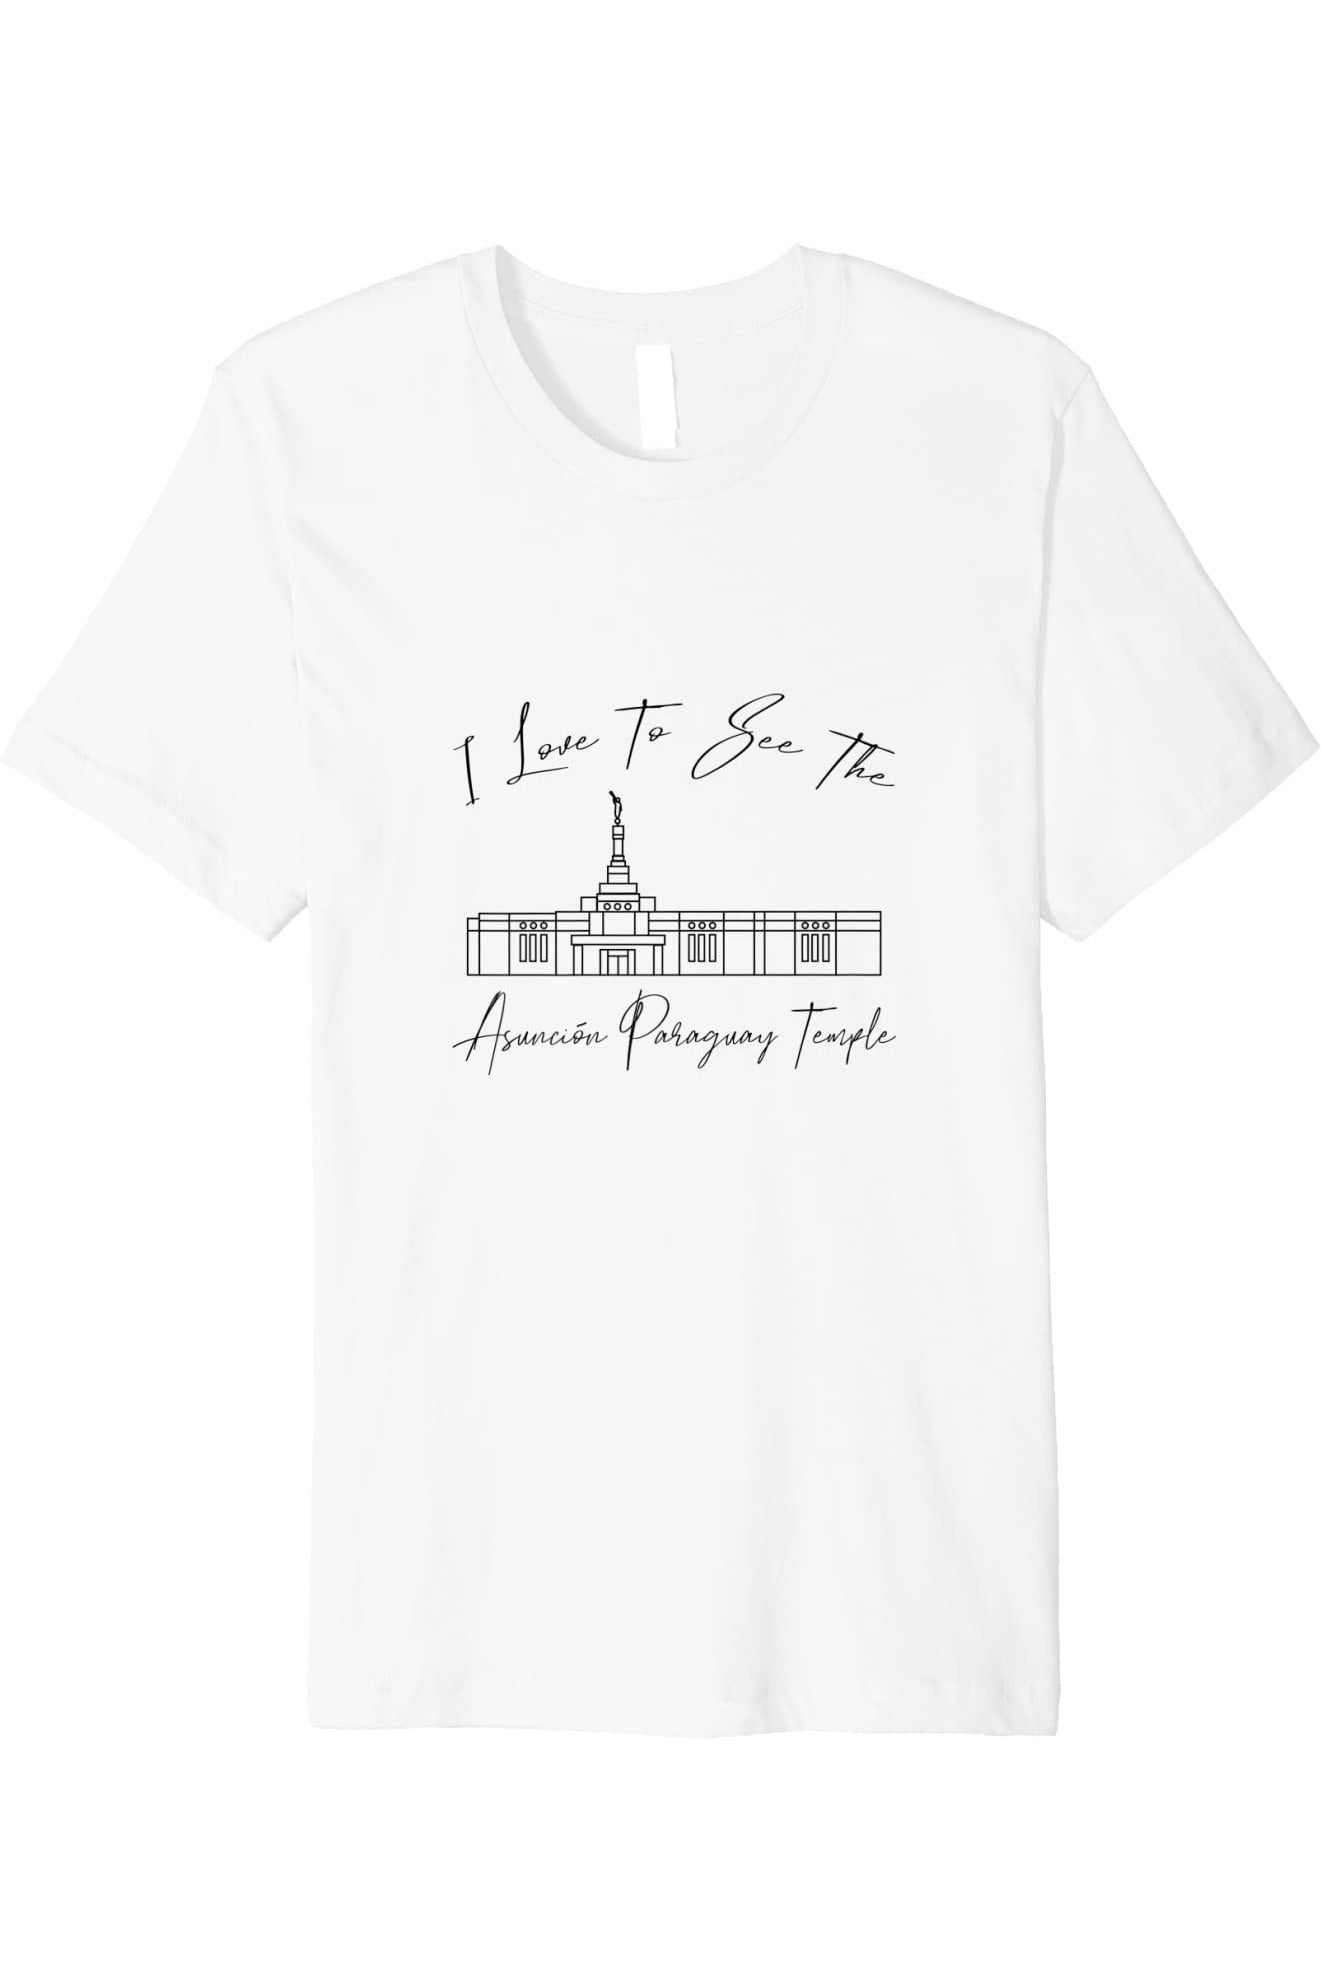 Asuncion Paraguay Temple T-Shirt - Premium - Calligraphy Style (English) US